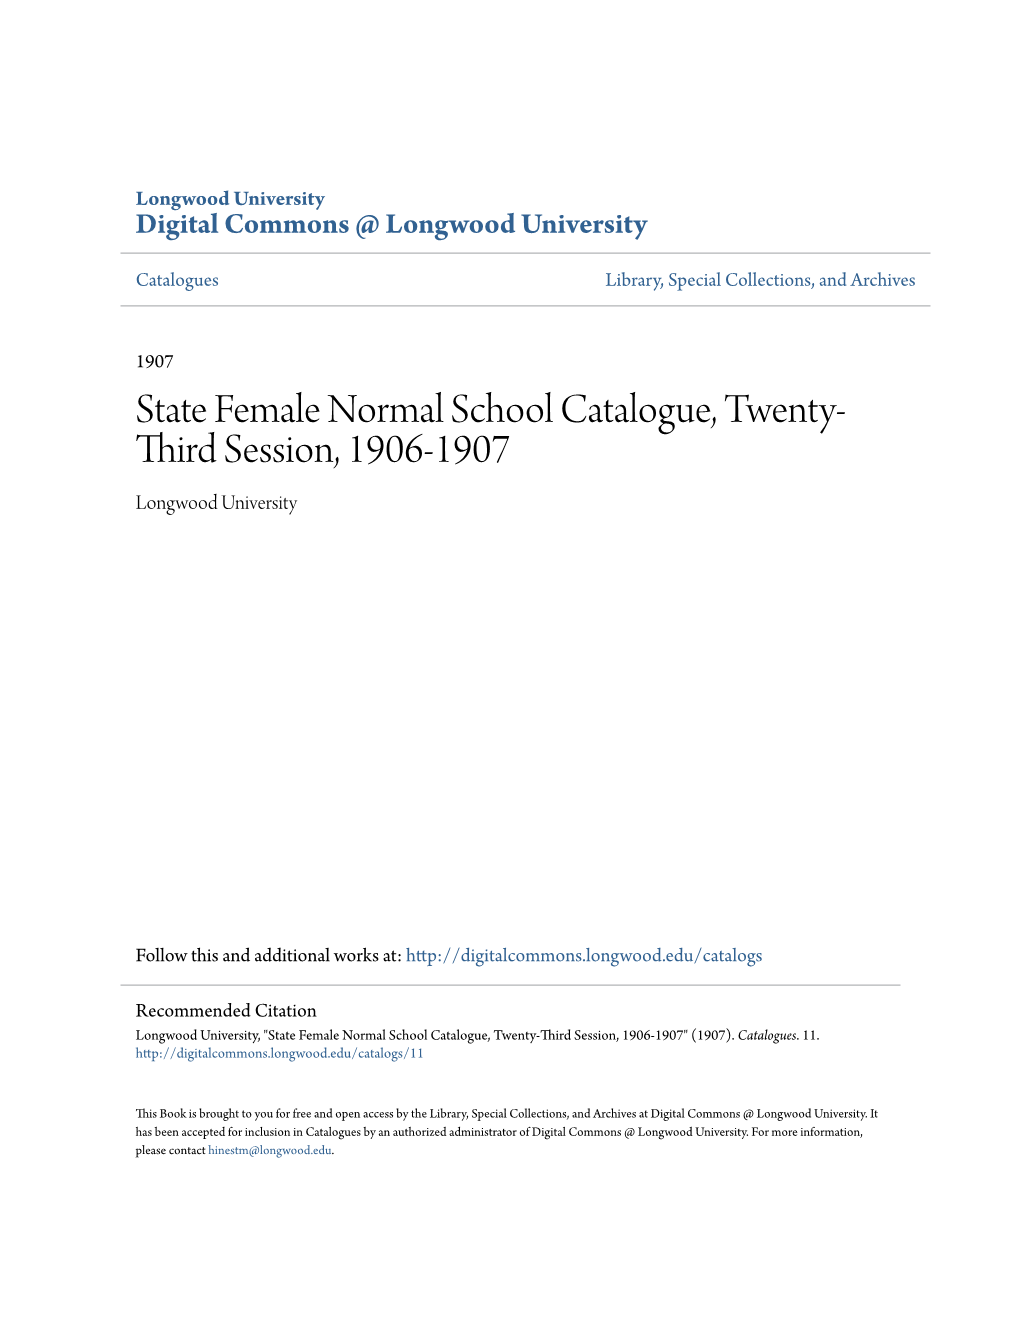 State Female Normal School Catalogue, Twenty-Third Session, 1906-1907" (1907)